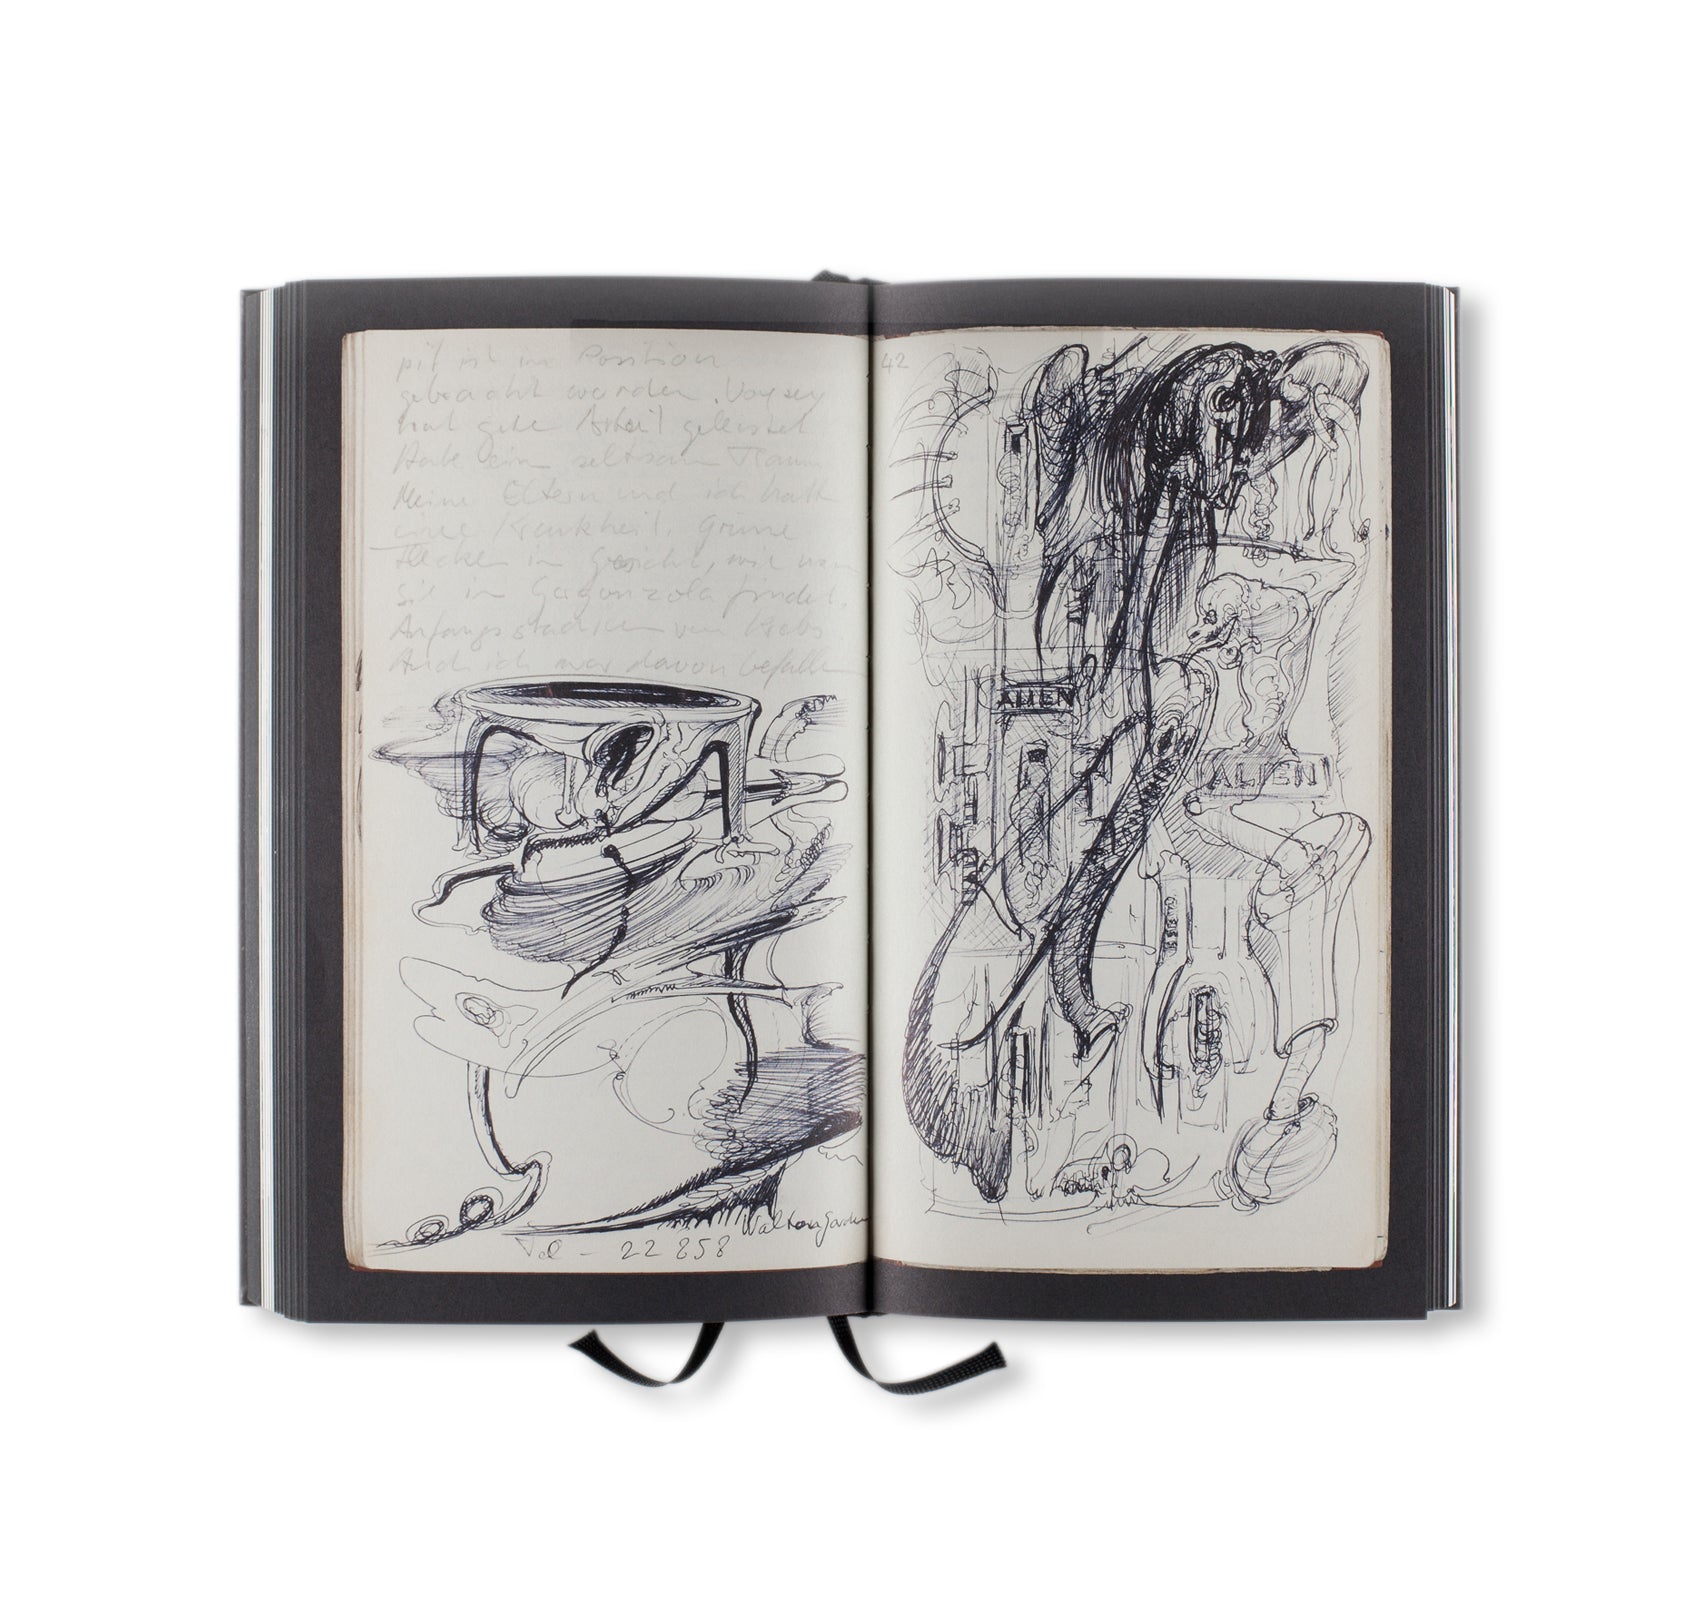 ALIEN DIARIES by H.R.Giger